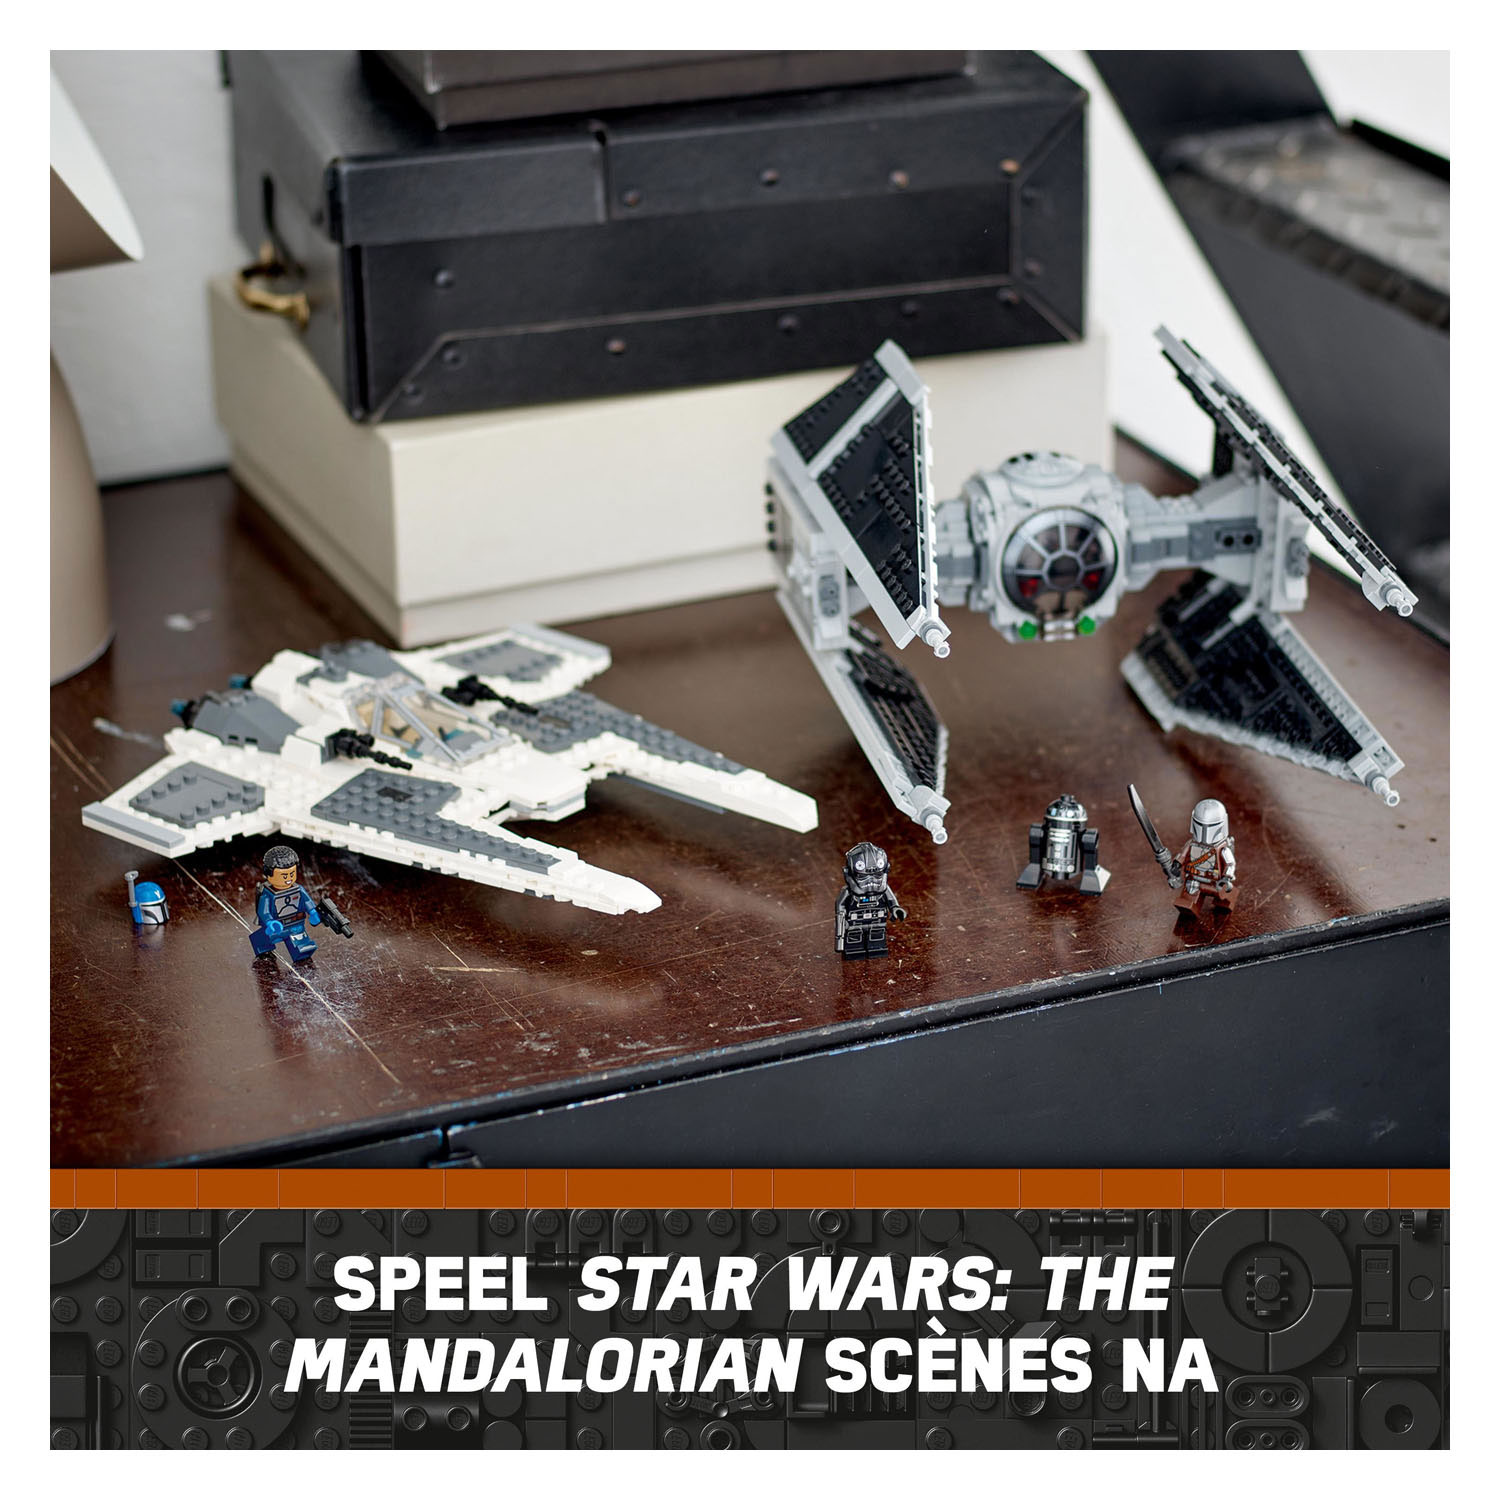 75348 LEGO Star Wars Mandalorian Fang Fighter vs. Ensemble d'intercepteurs TIE